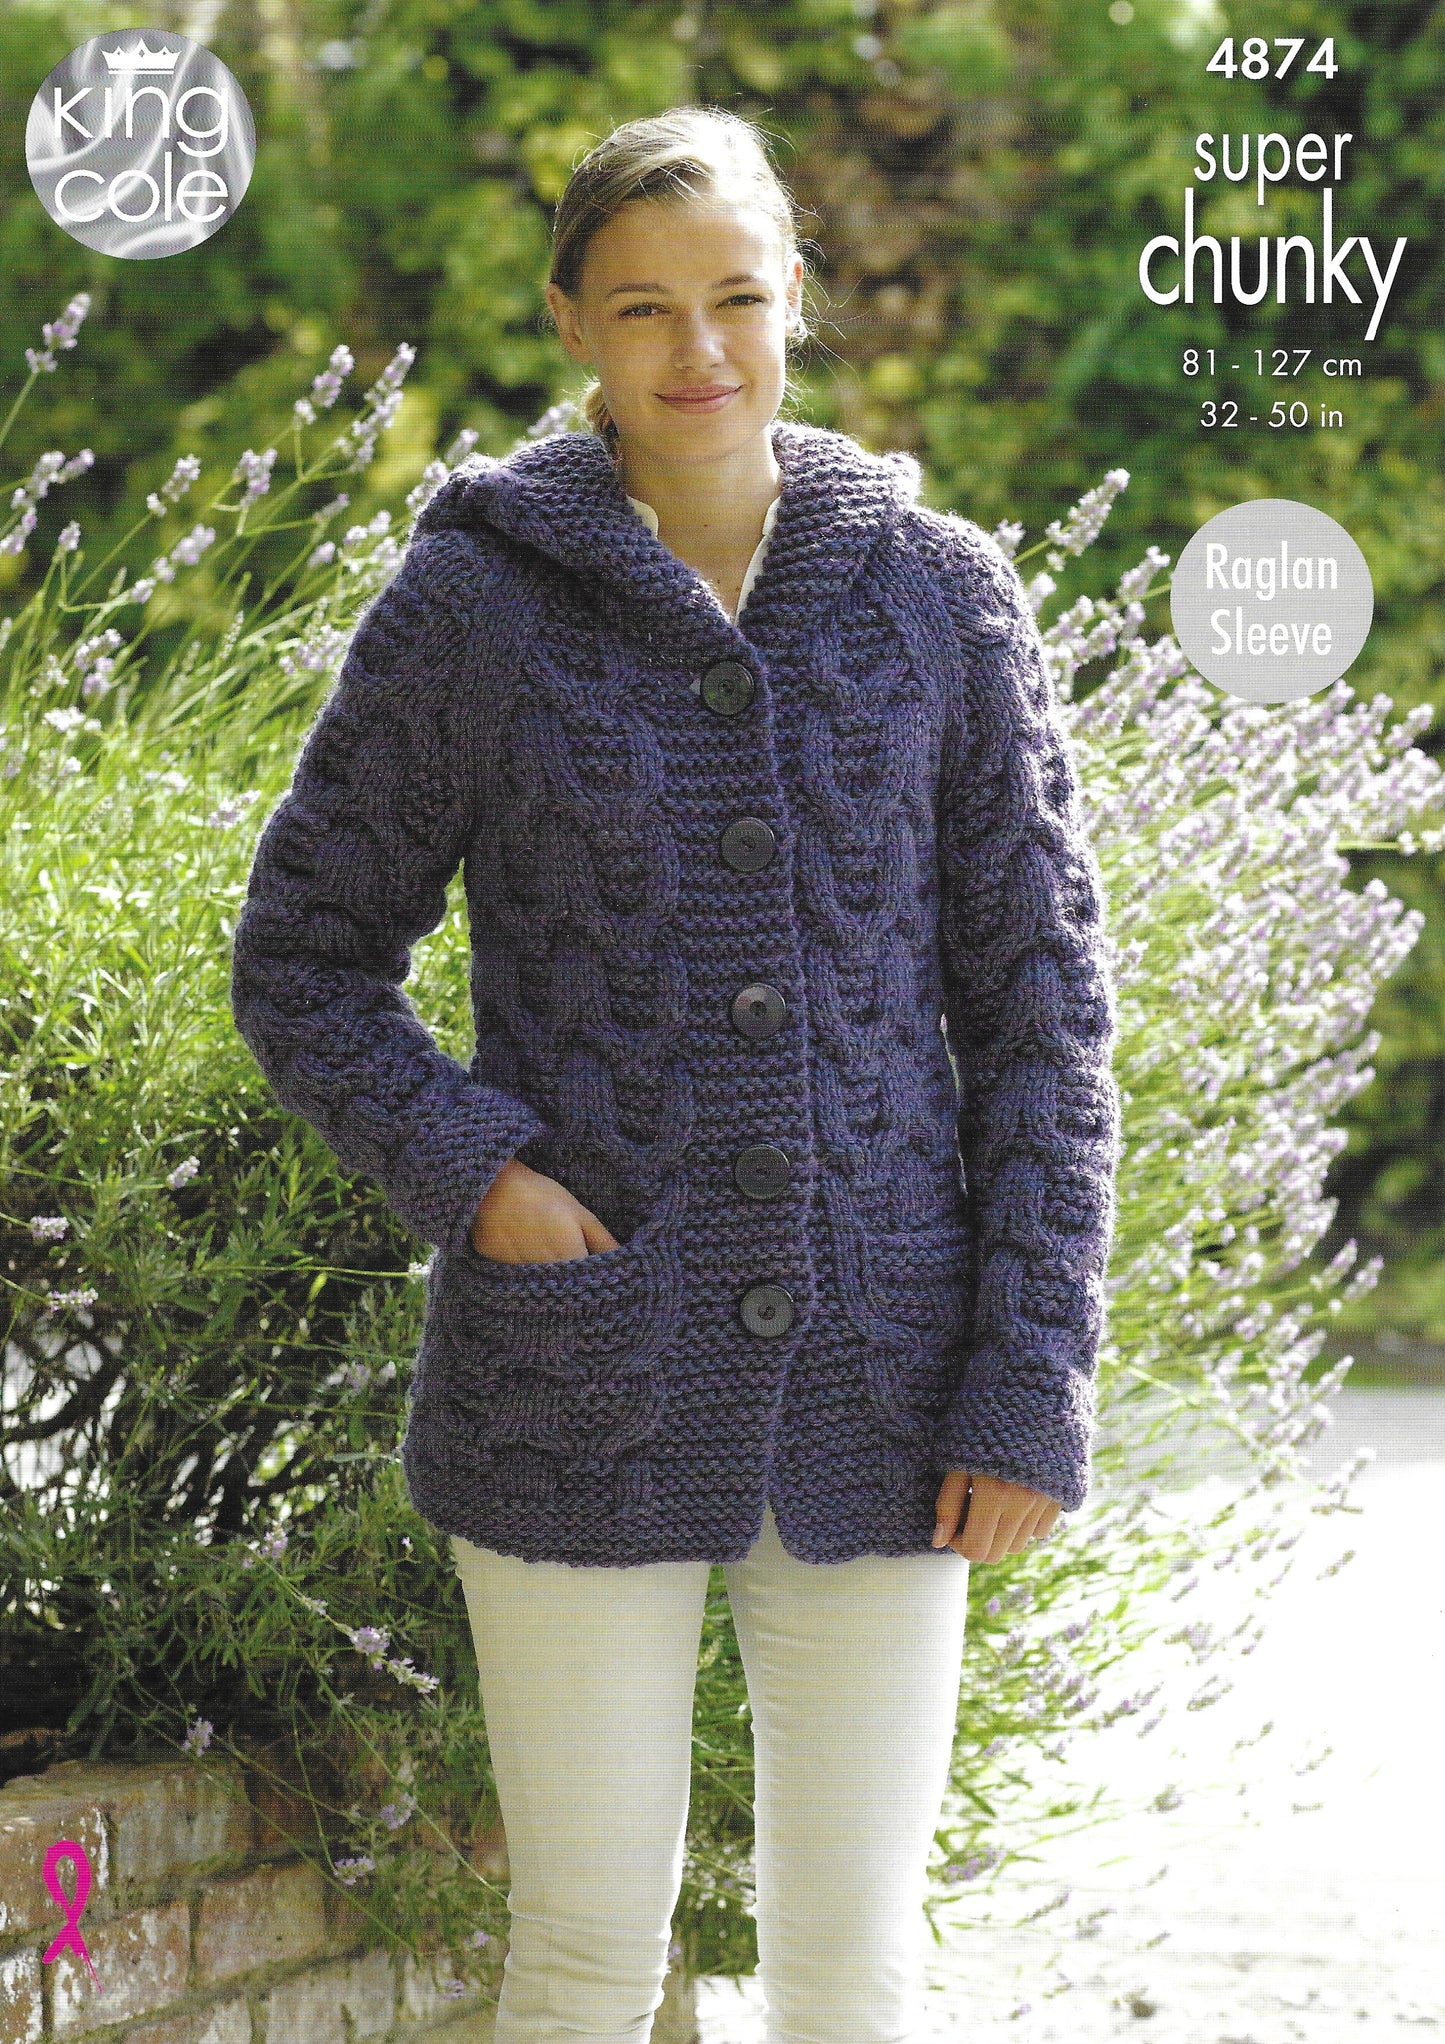 King Cole 4874 Jacket & Sweater Raglan Sleeve Super Chunky Knitting Pattern